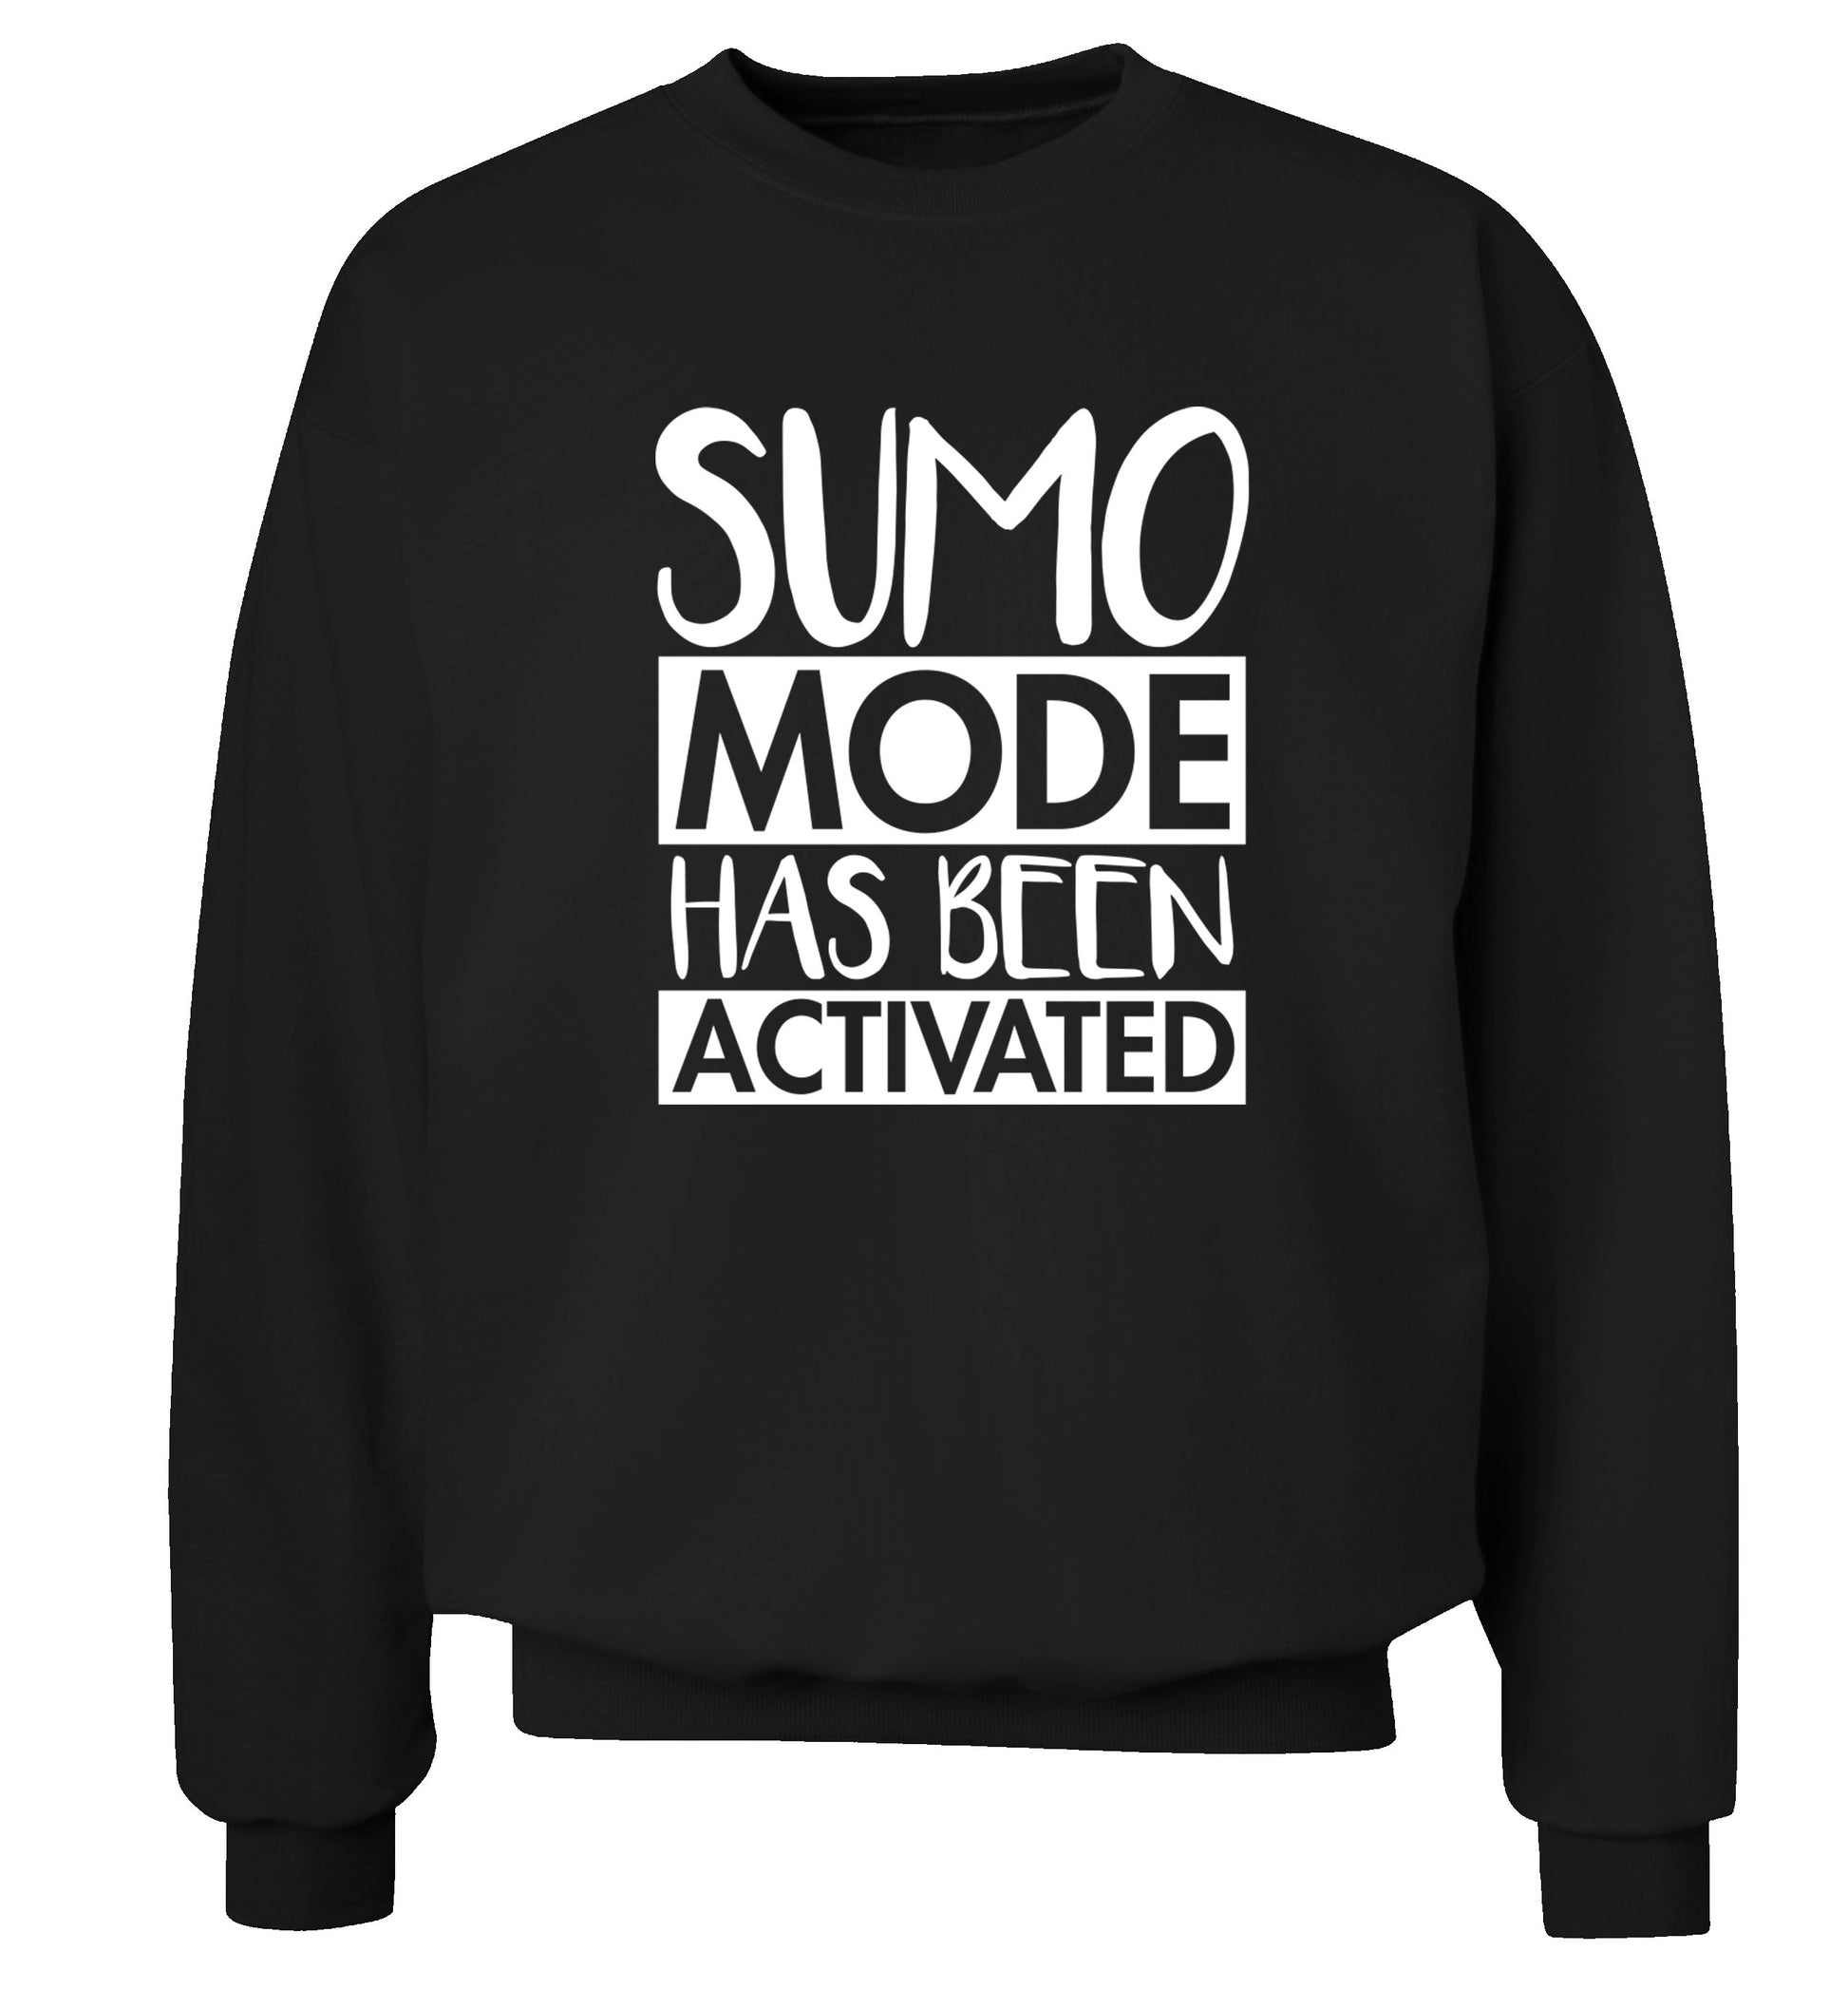 Sumo mode activated Adult's unisex black Sweater 2XL